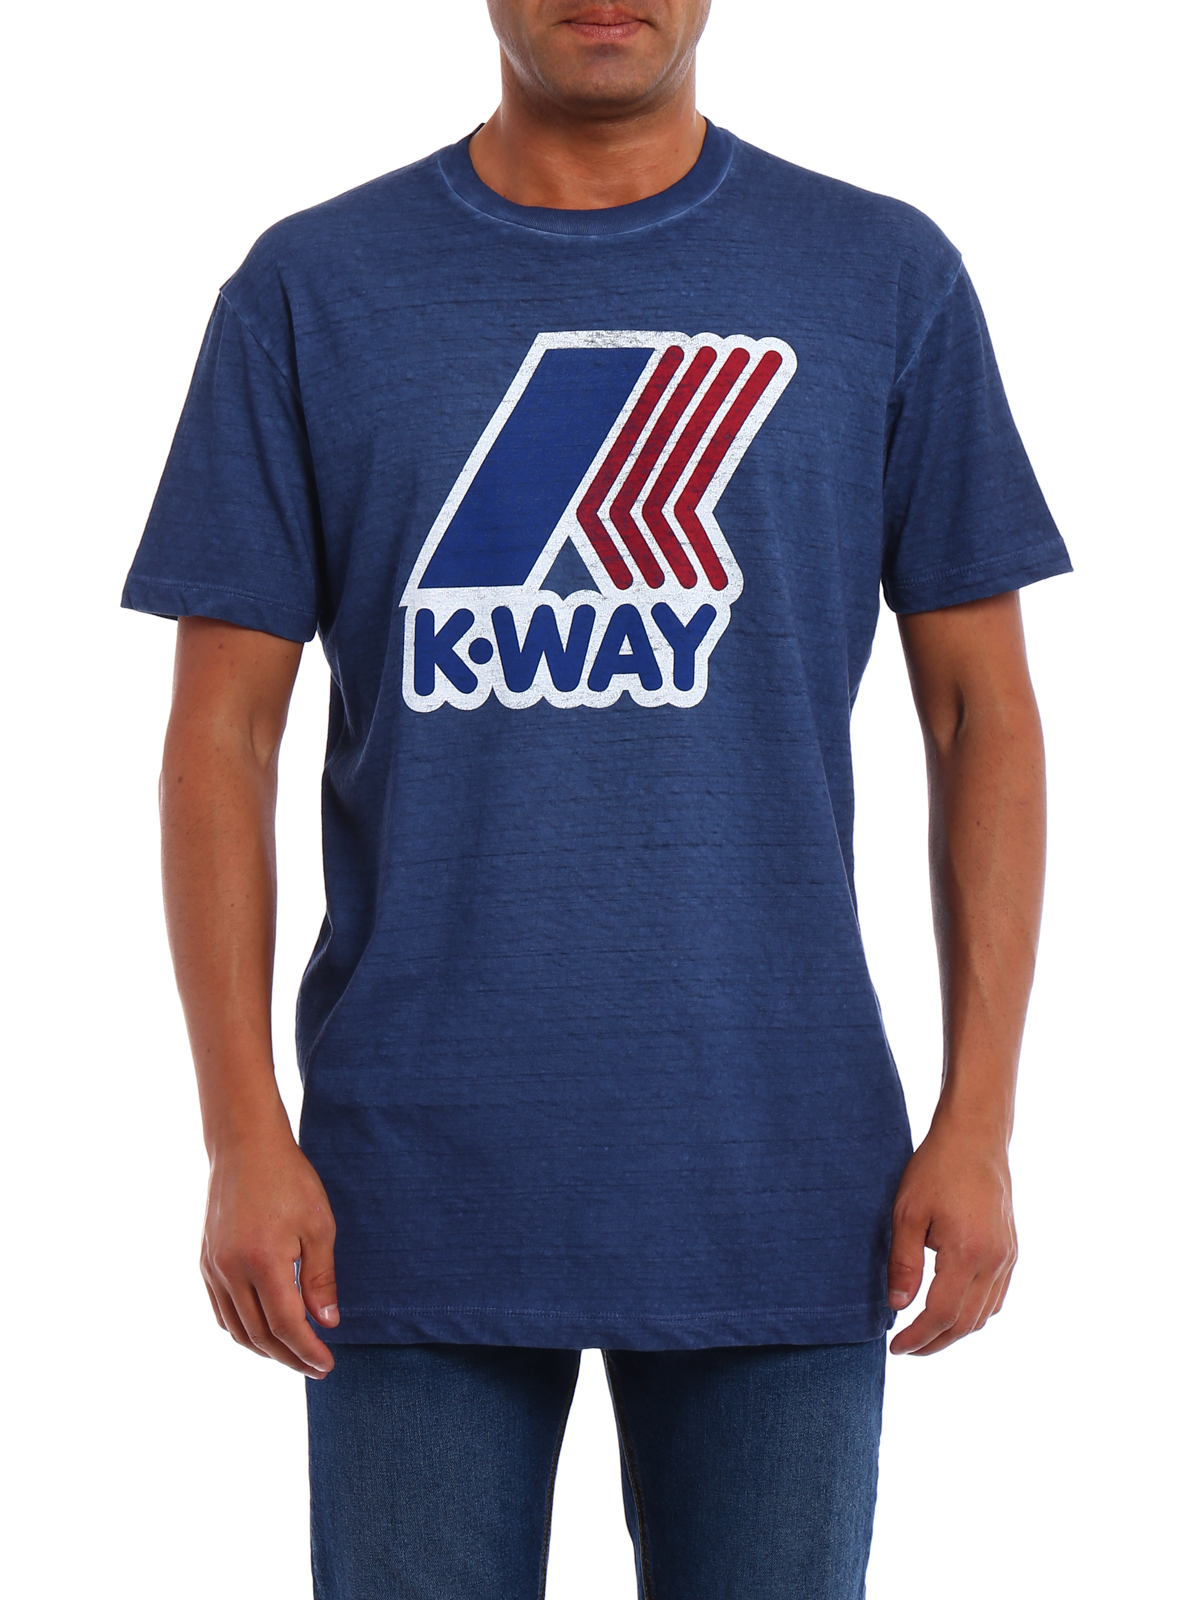 Футболка Kussia. K-way бренд чей. Judo t Shirt. Way collection